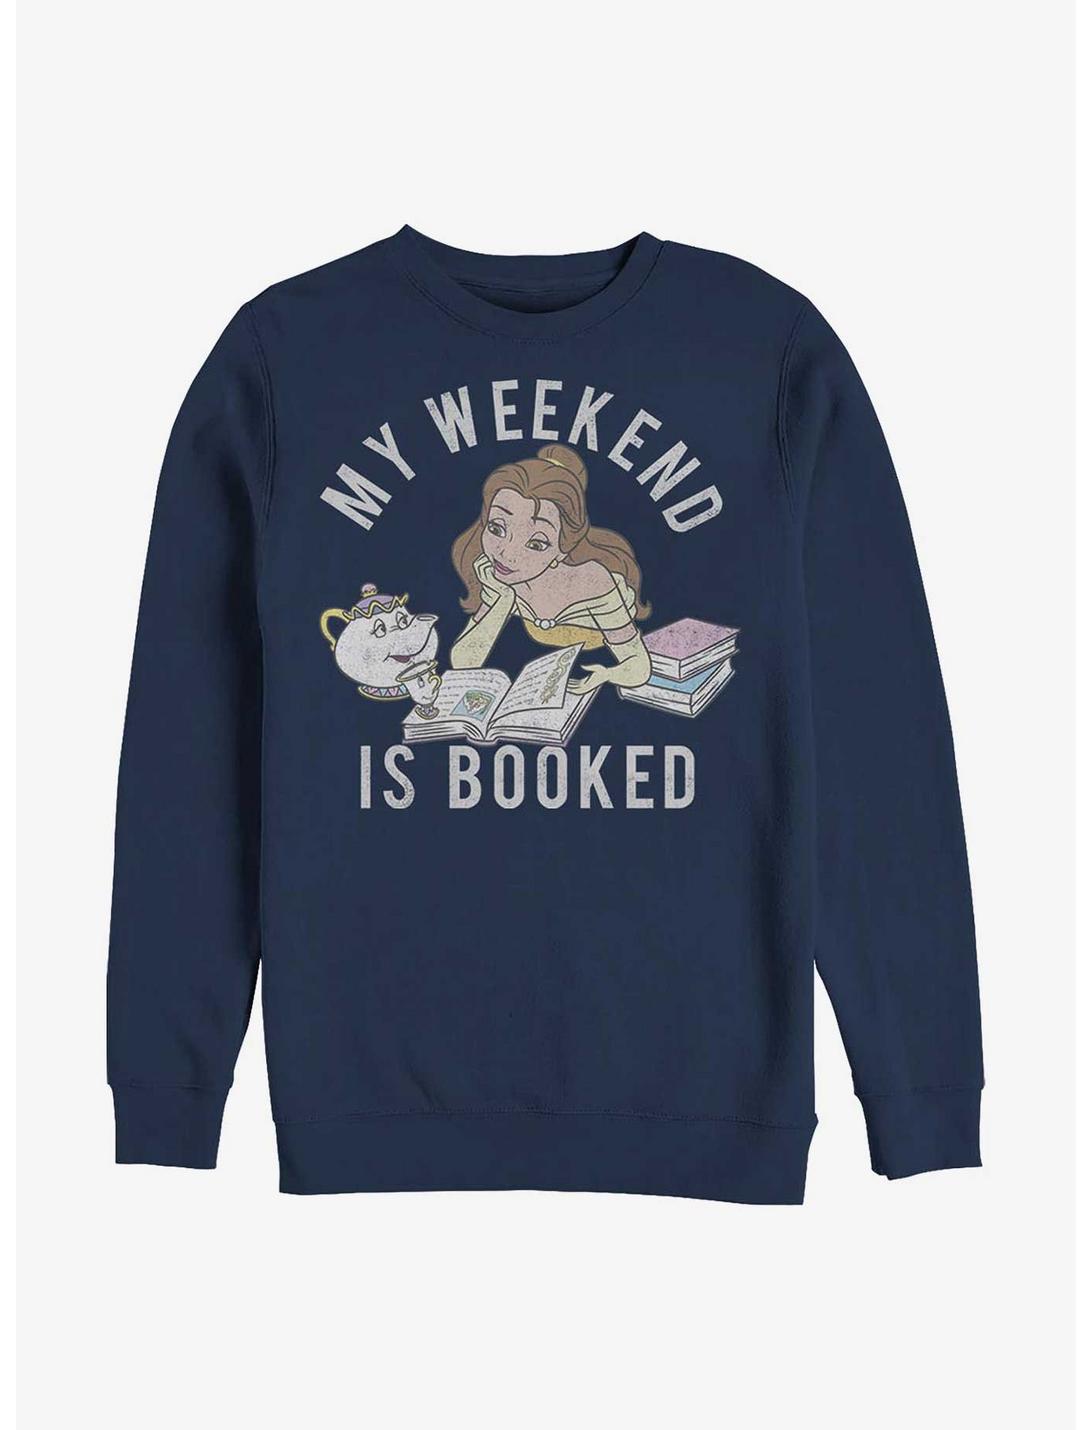 Disney Beauty And The Beast Weekend Is Booked Sweatshirt, NAVY, hi-res